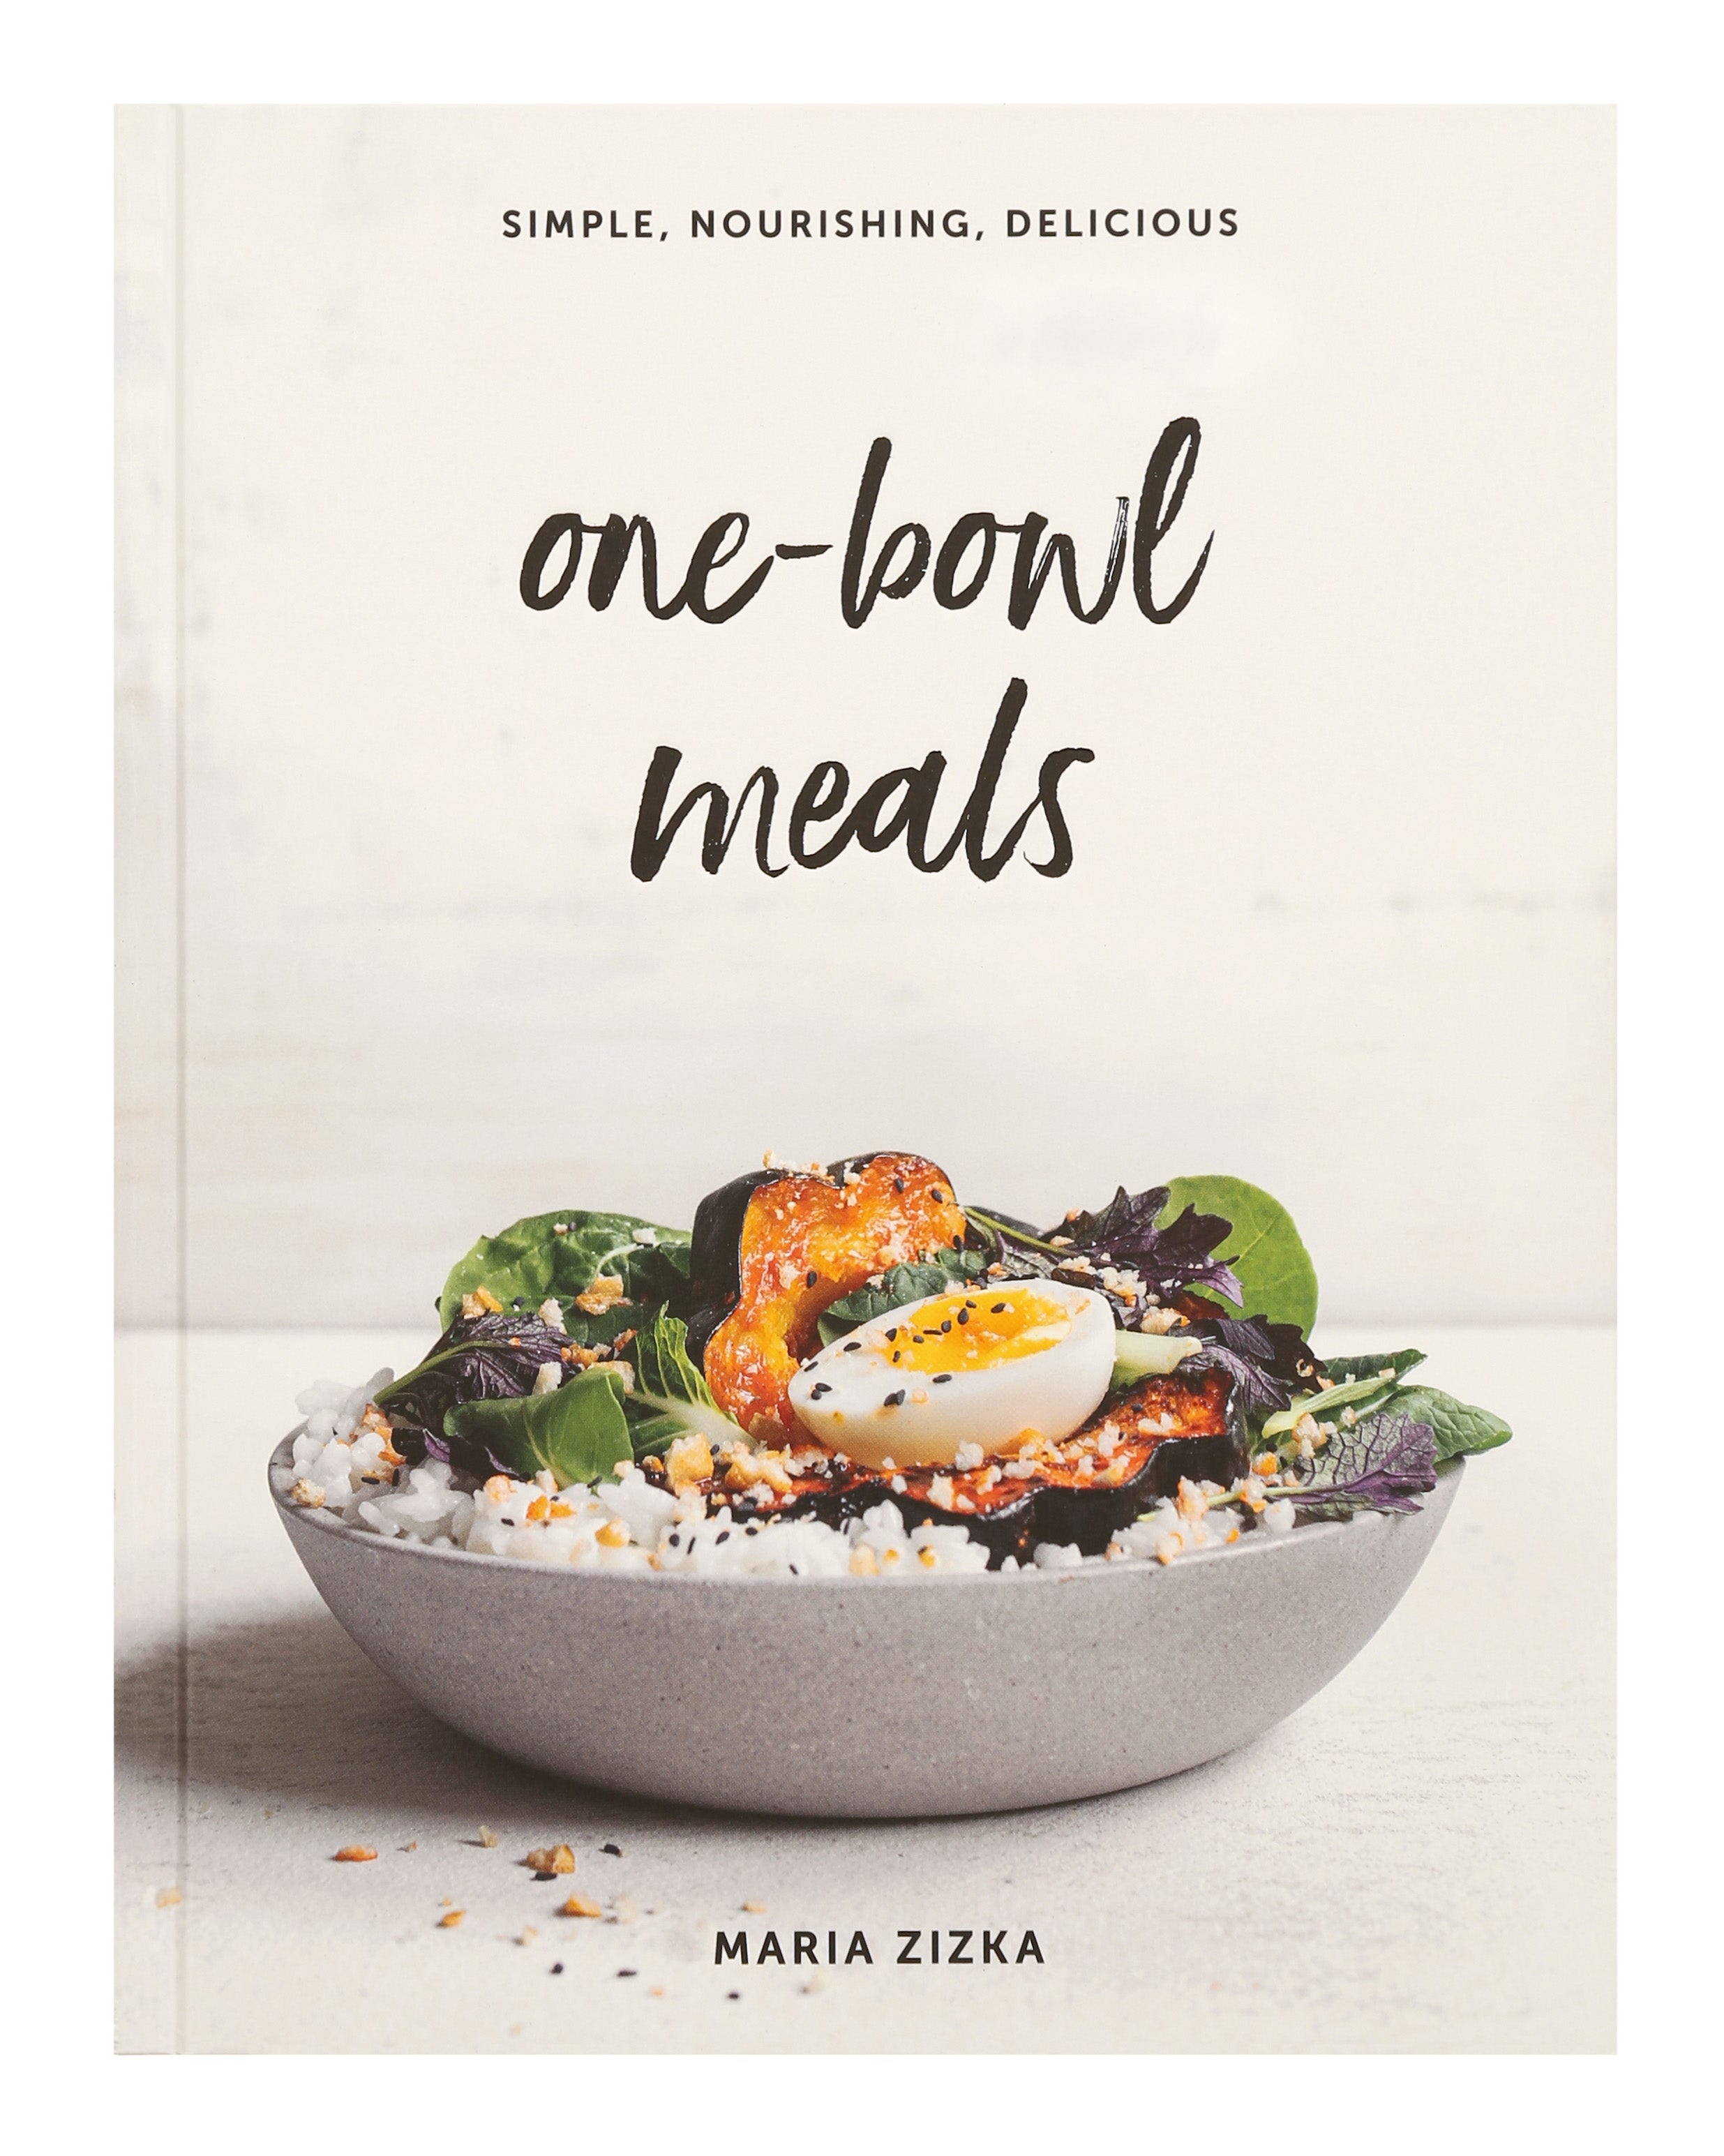 Meal Prep DIY Bowls • Just One Cookbook